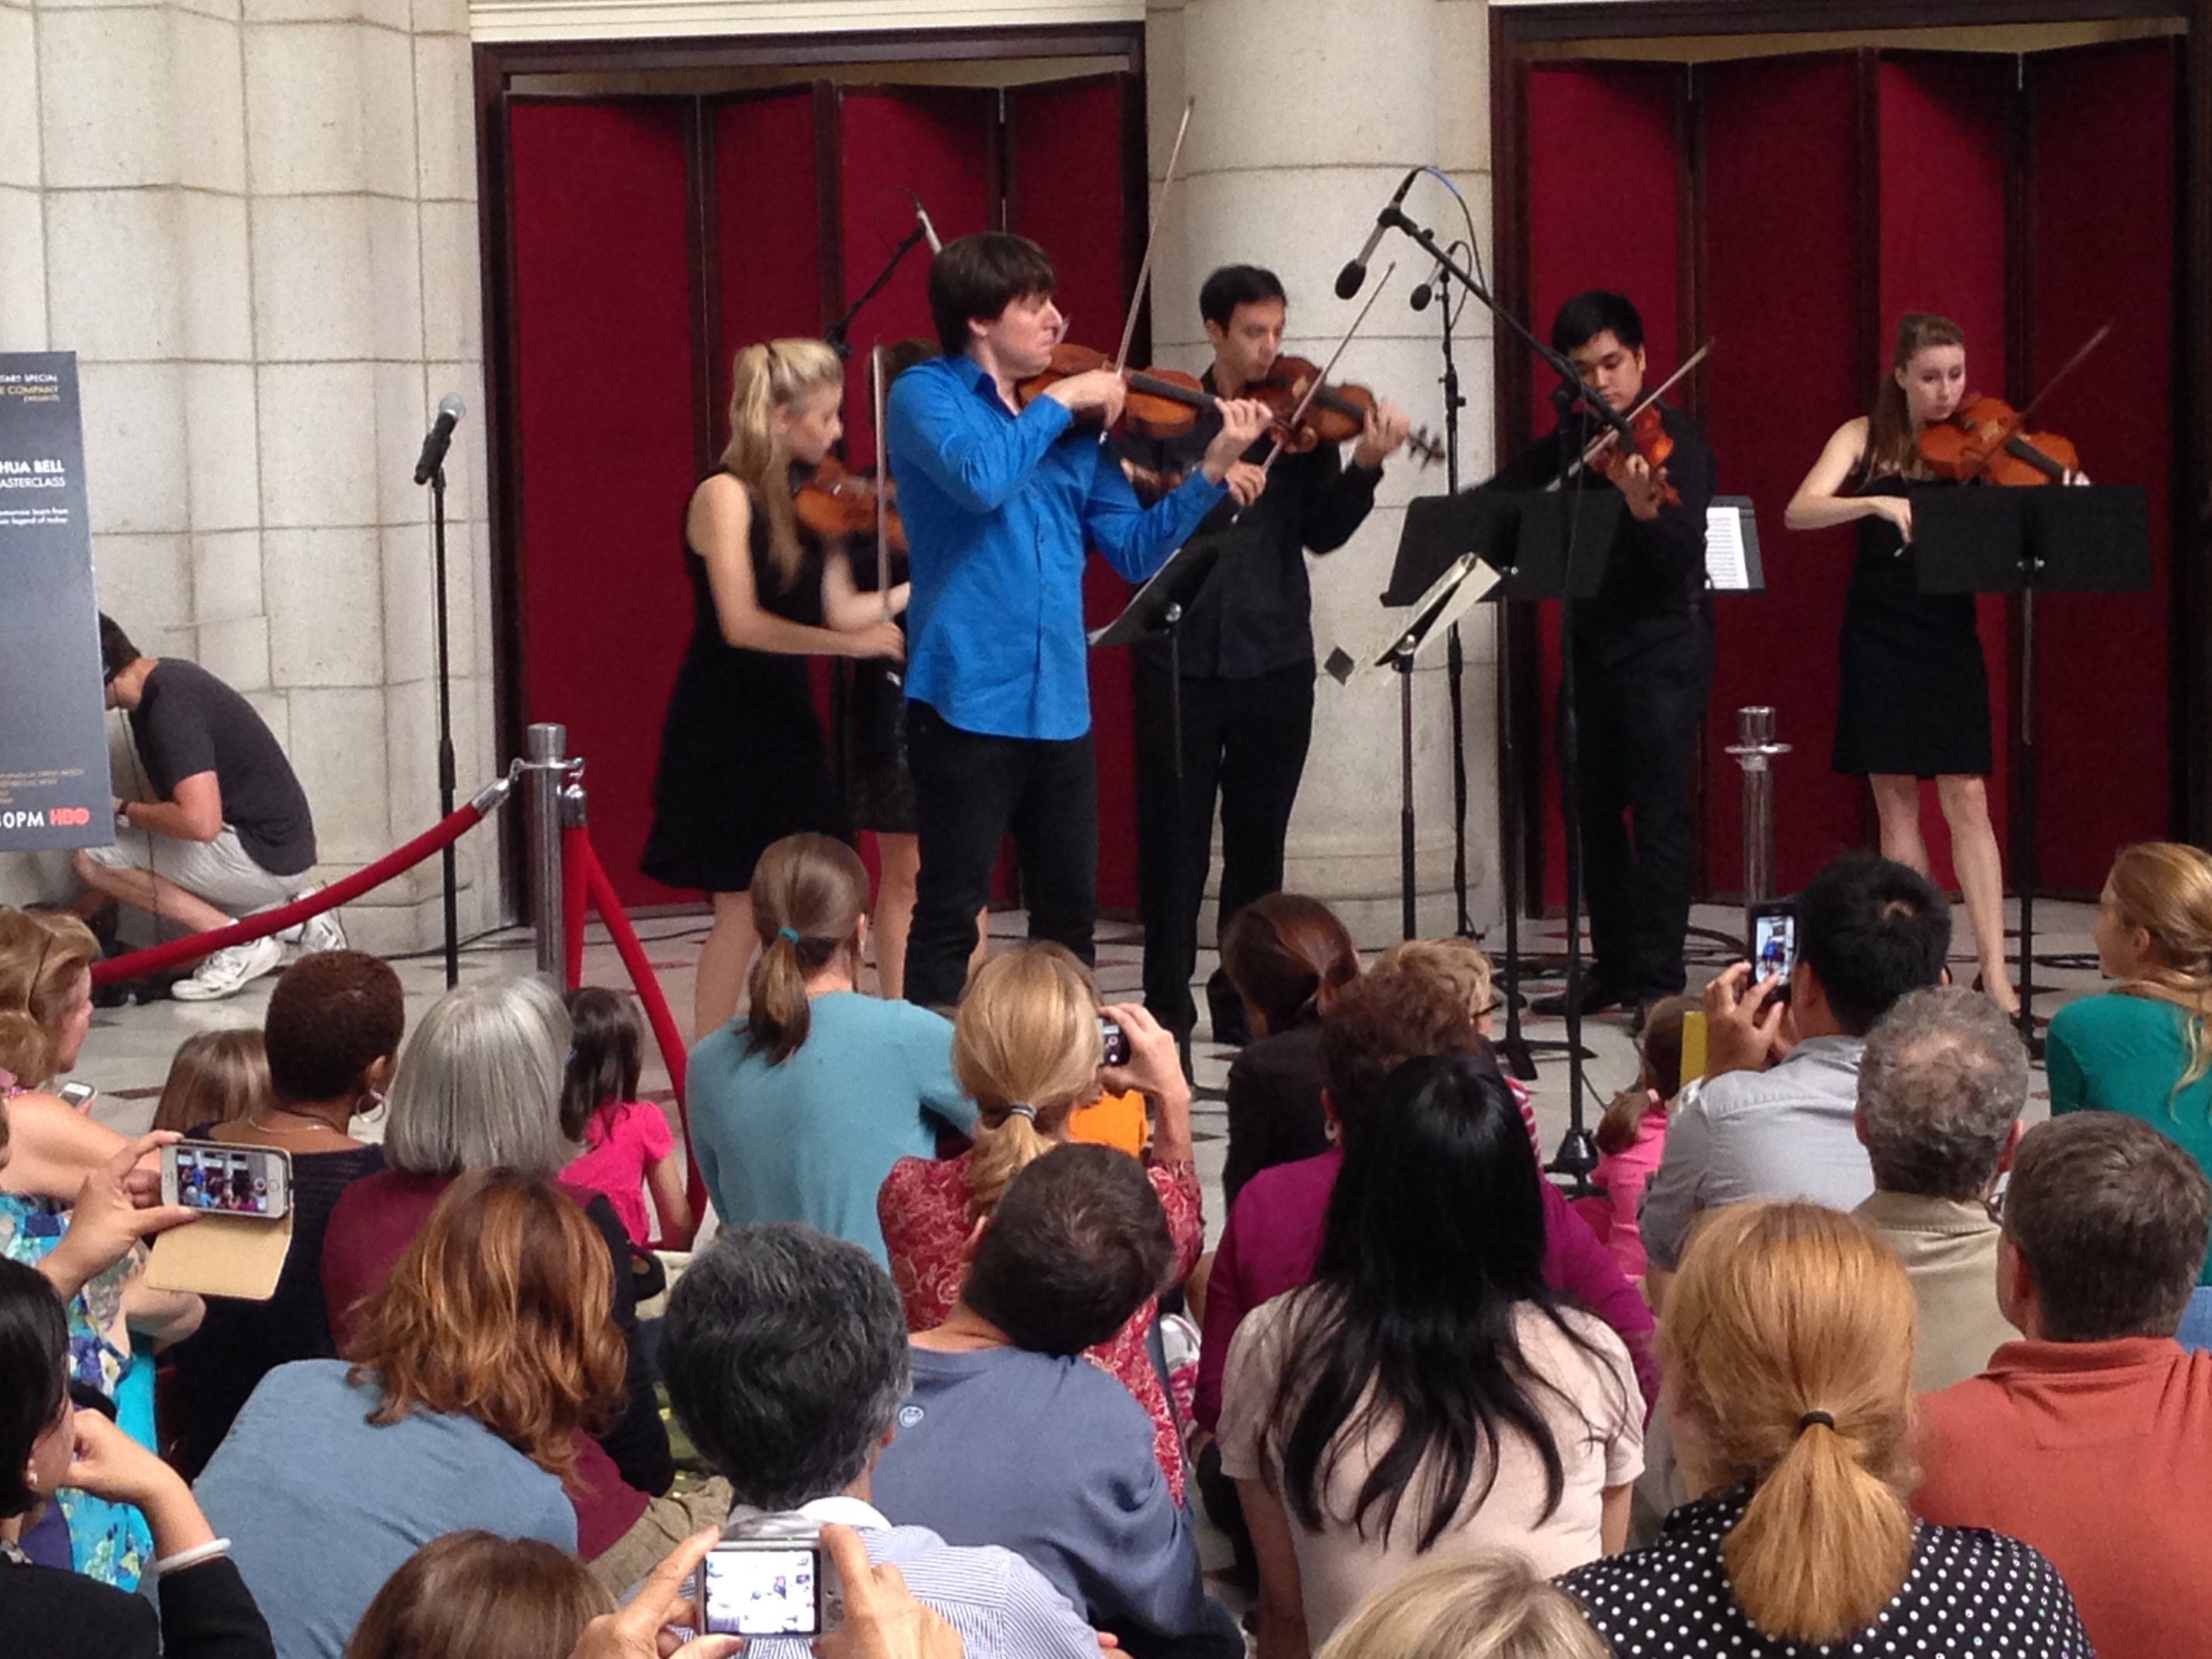 Joshua Bell performs in Union Station in Washington, D.C. on September 30, 2014. (Tessa Berenson)